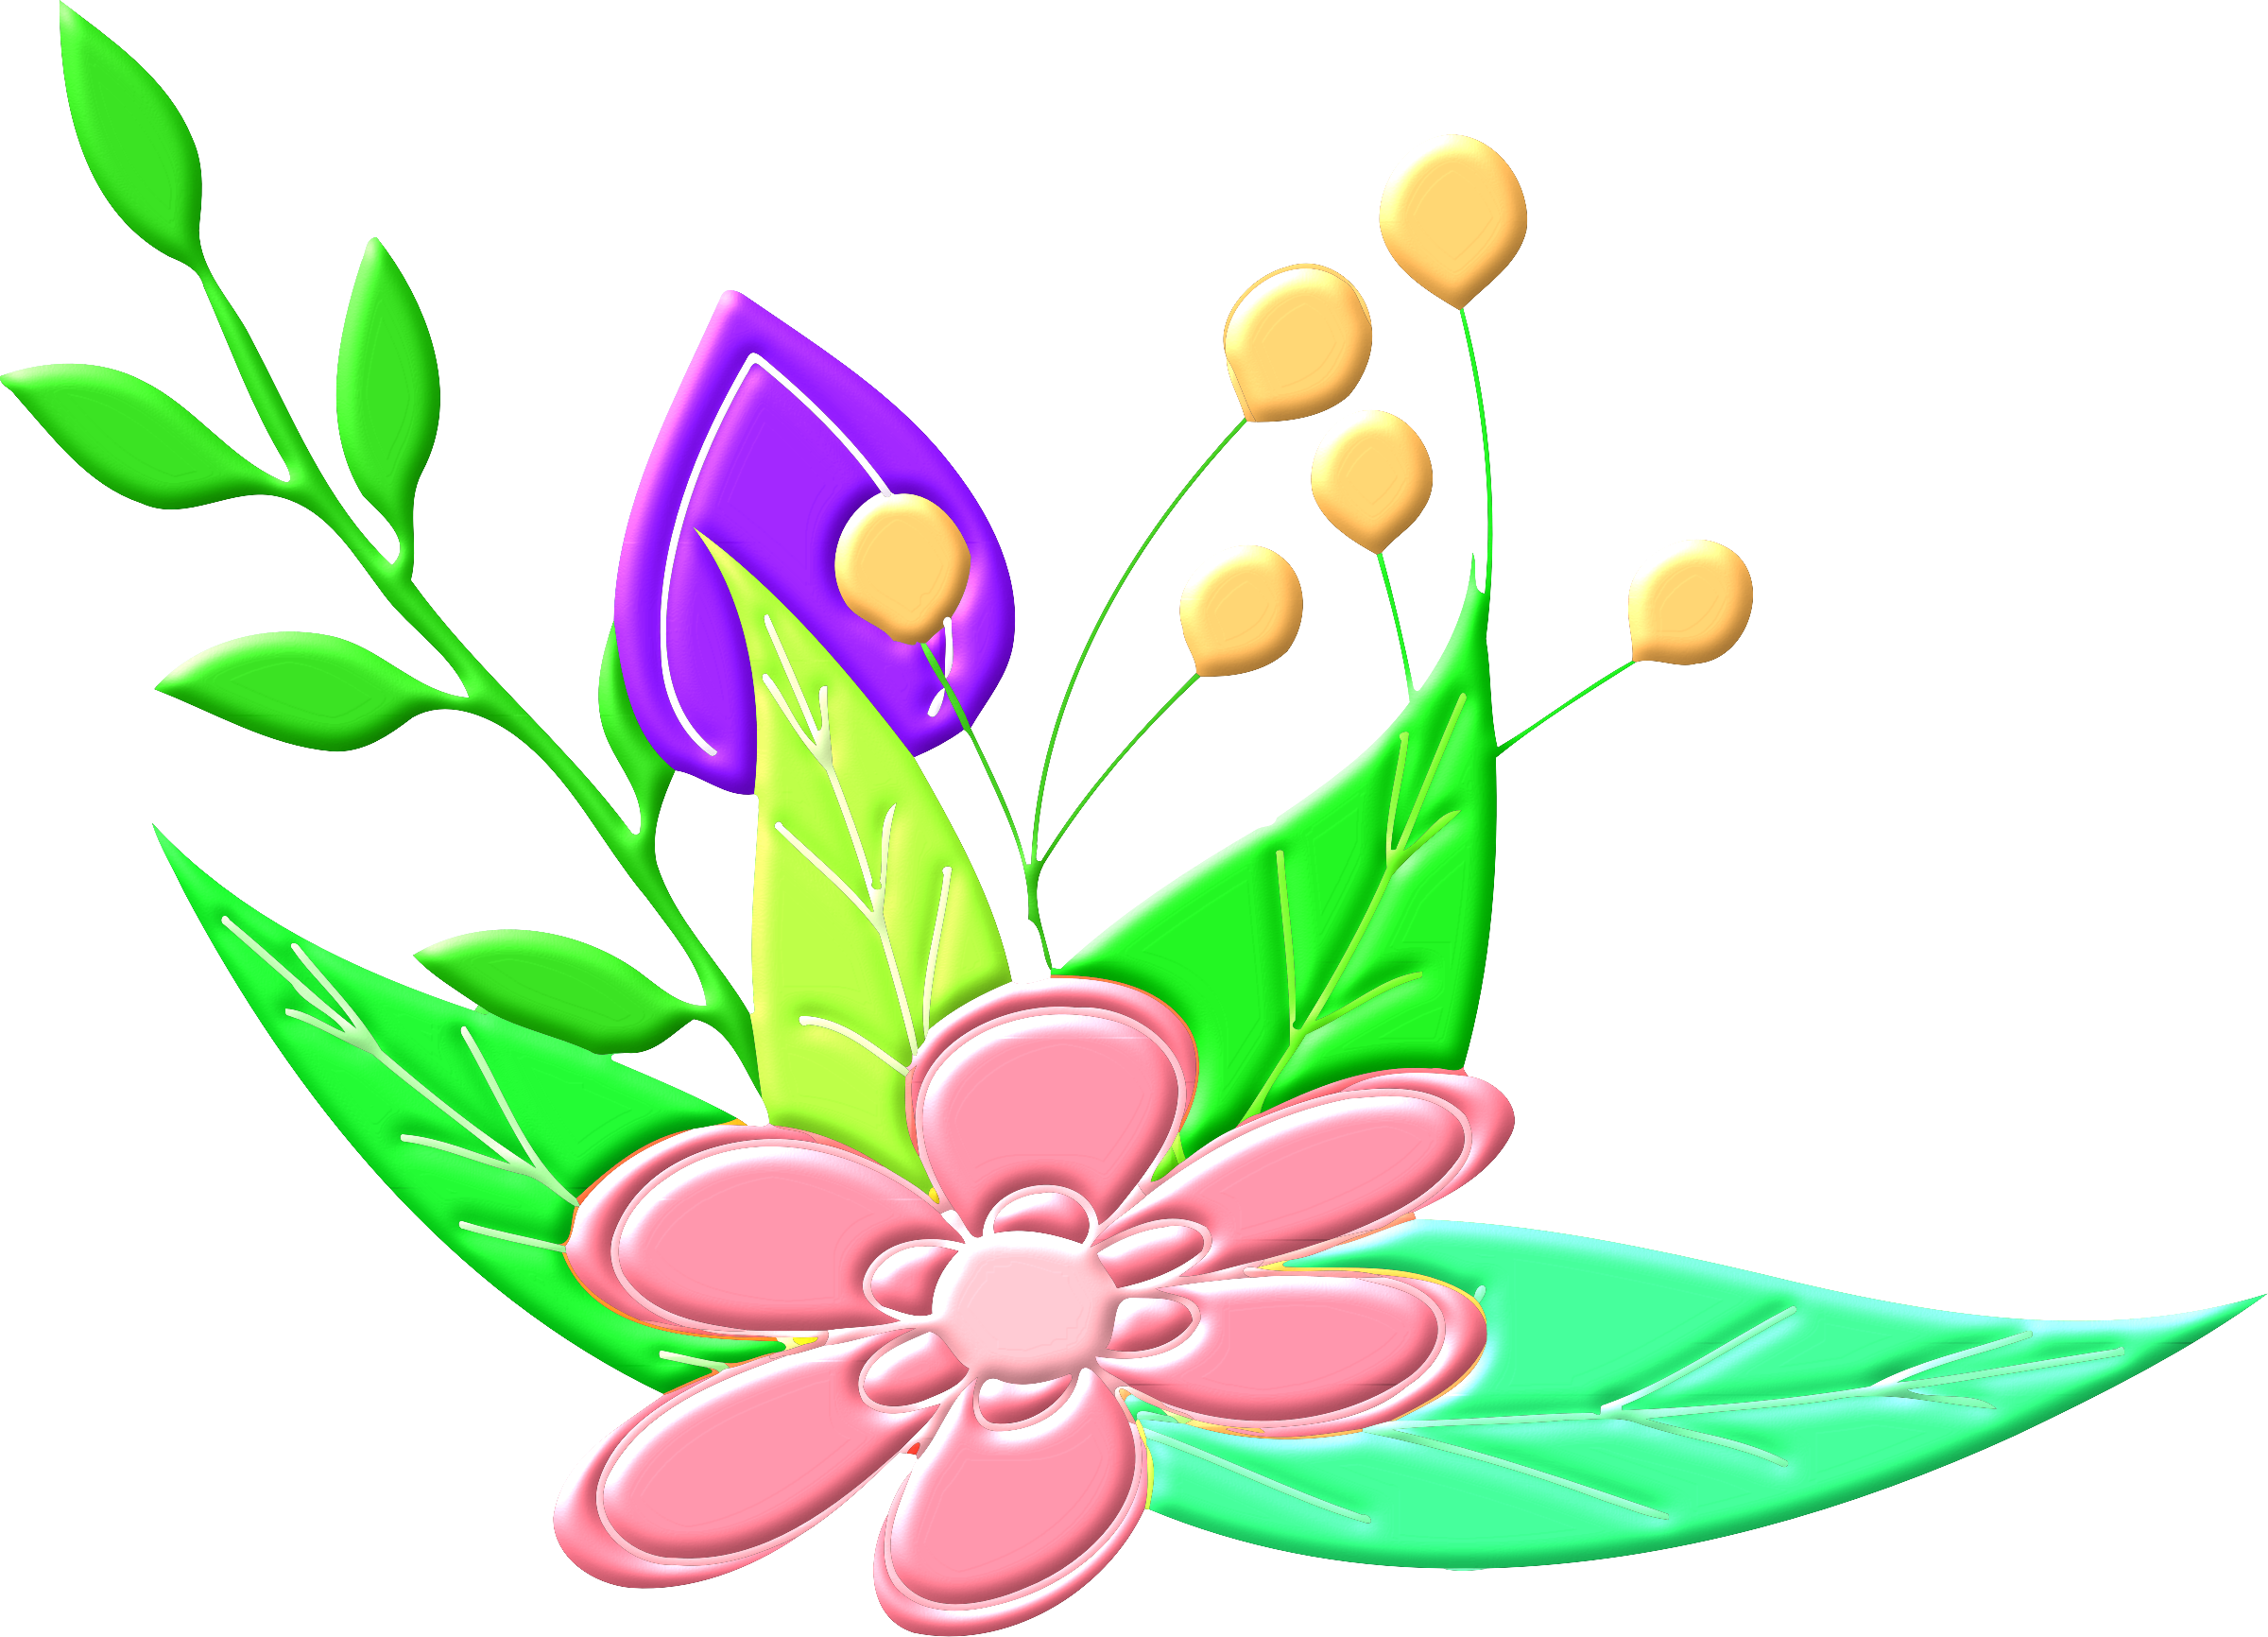 Floral Design Vector Clipart Image Free Stock Photo Public Domain Photo Cc0 Images